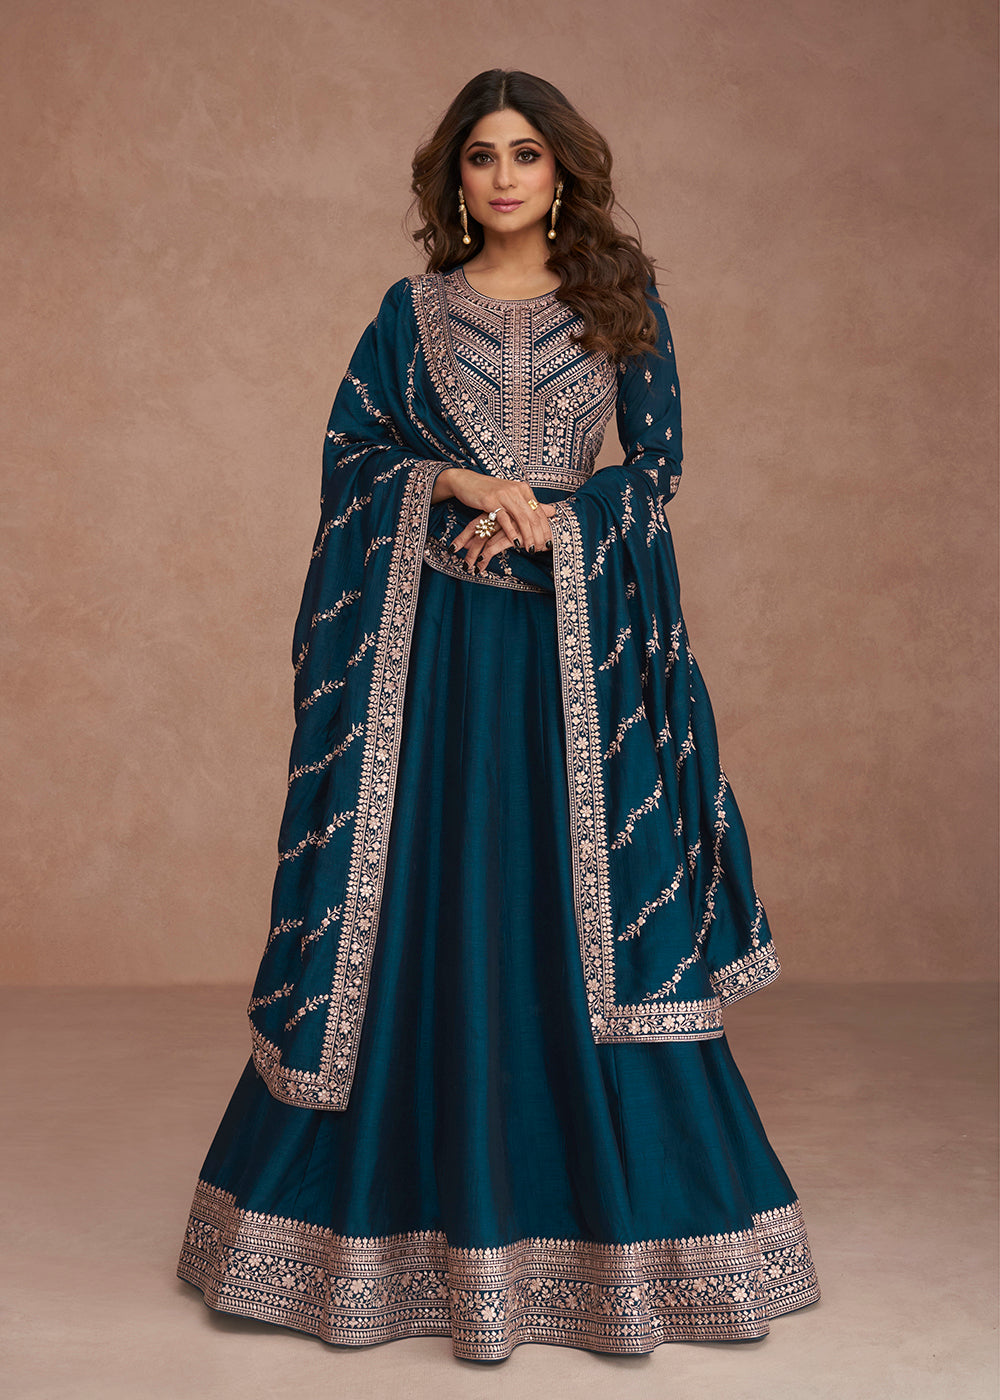 Buy Now Shamita Shetty Festive Blazing Teal Blue Silk Anarkali Suit Online in USA, UK, Australia, New Zealand, Canada, Italy & Worldwide at Empress Clothing.